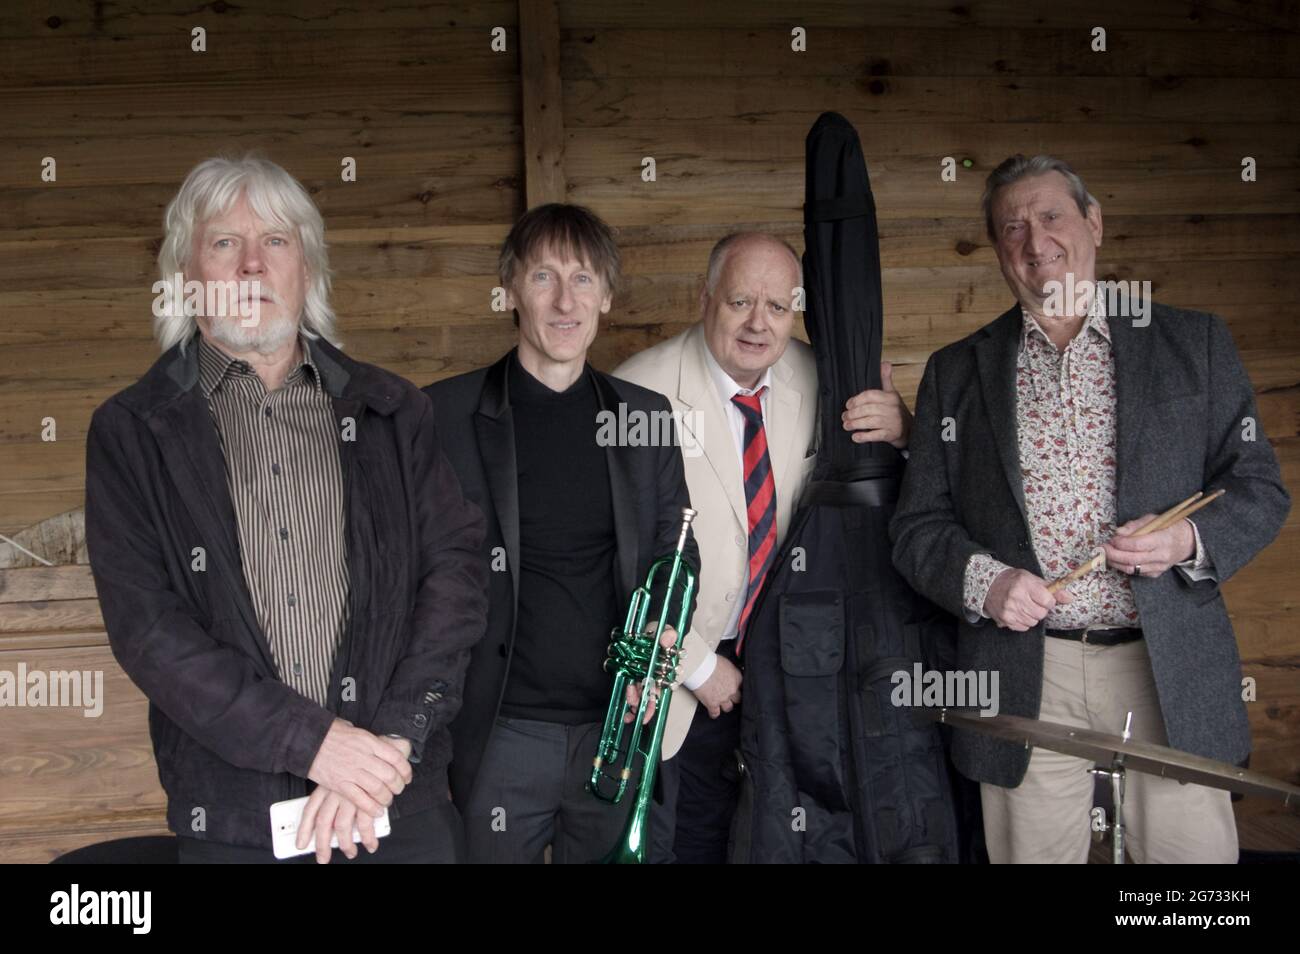 Mike Hatchard, Paul Morgan, Paul Higgs, Dave Barry, Three Horseshoes, Knockholt, Kent, 18th May 2021. Stock Photo